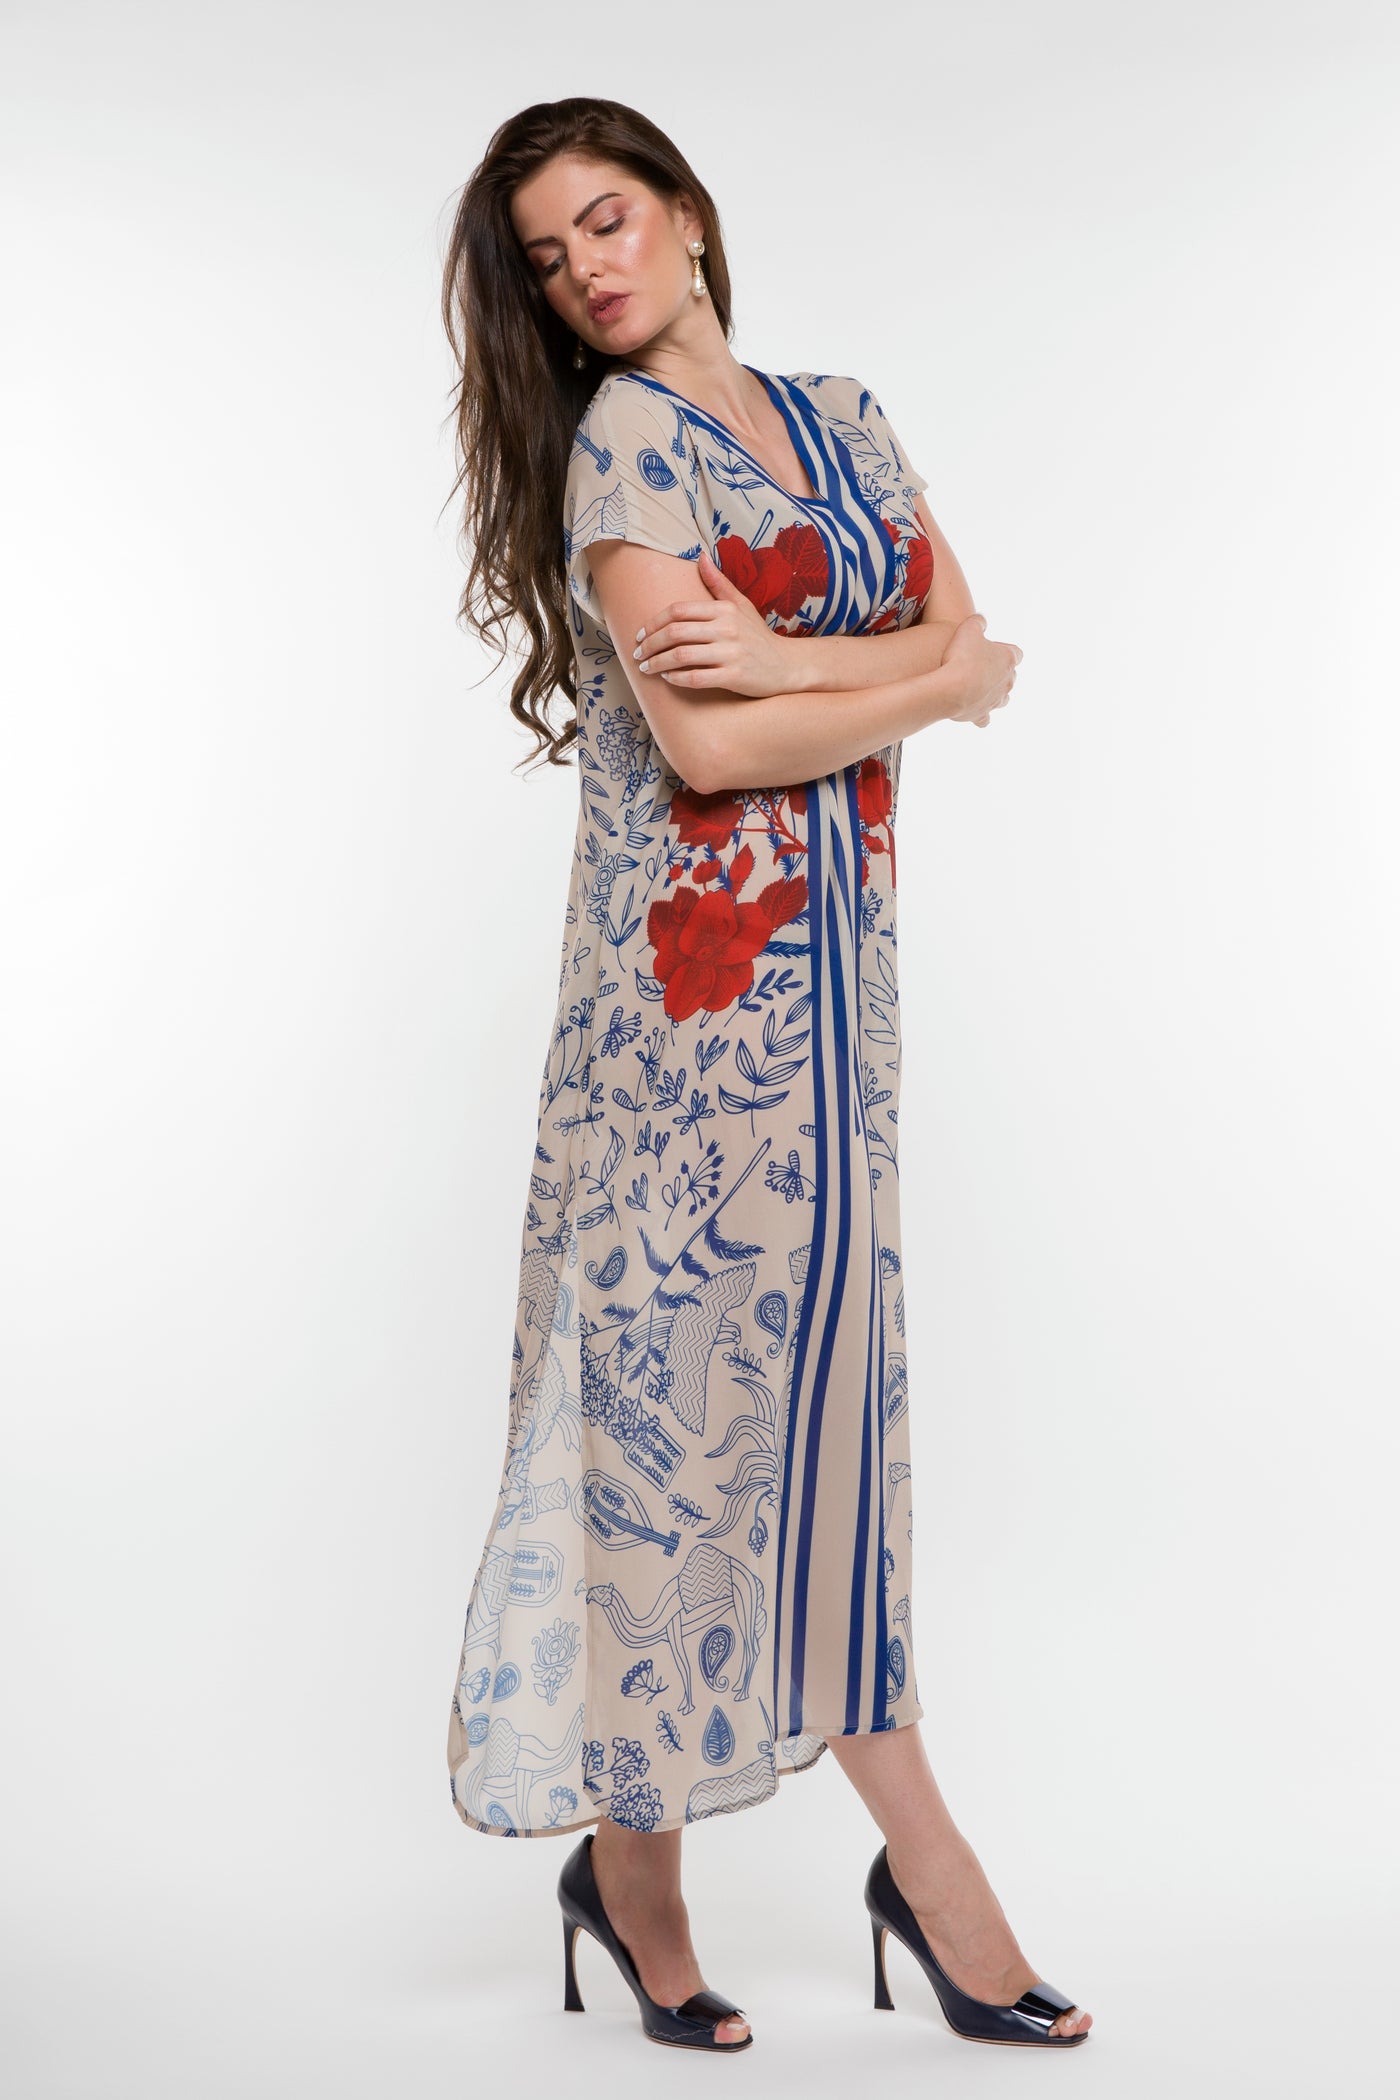 Tazhou Dress 18F-028